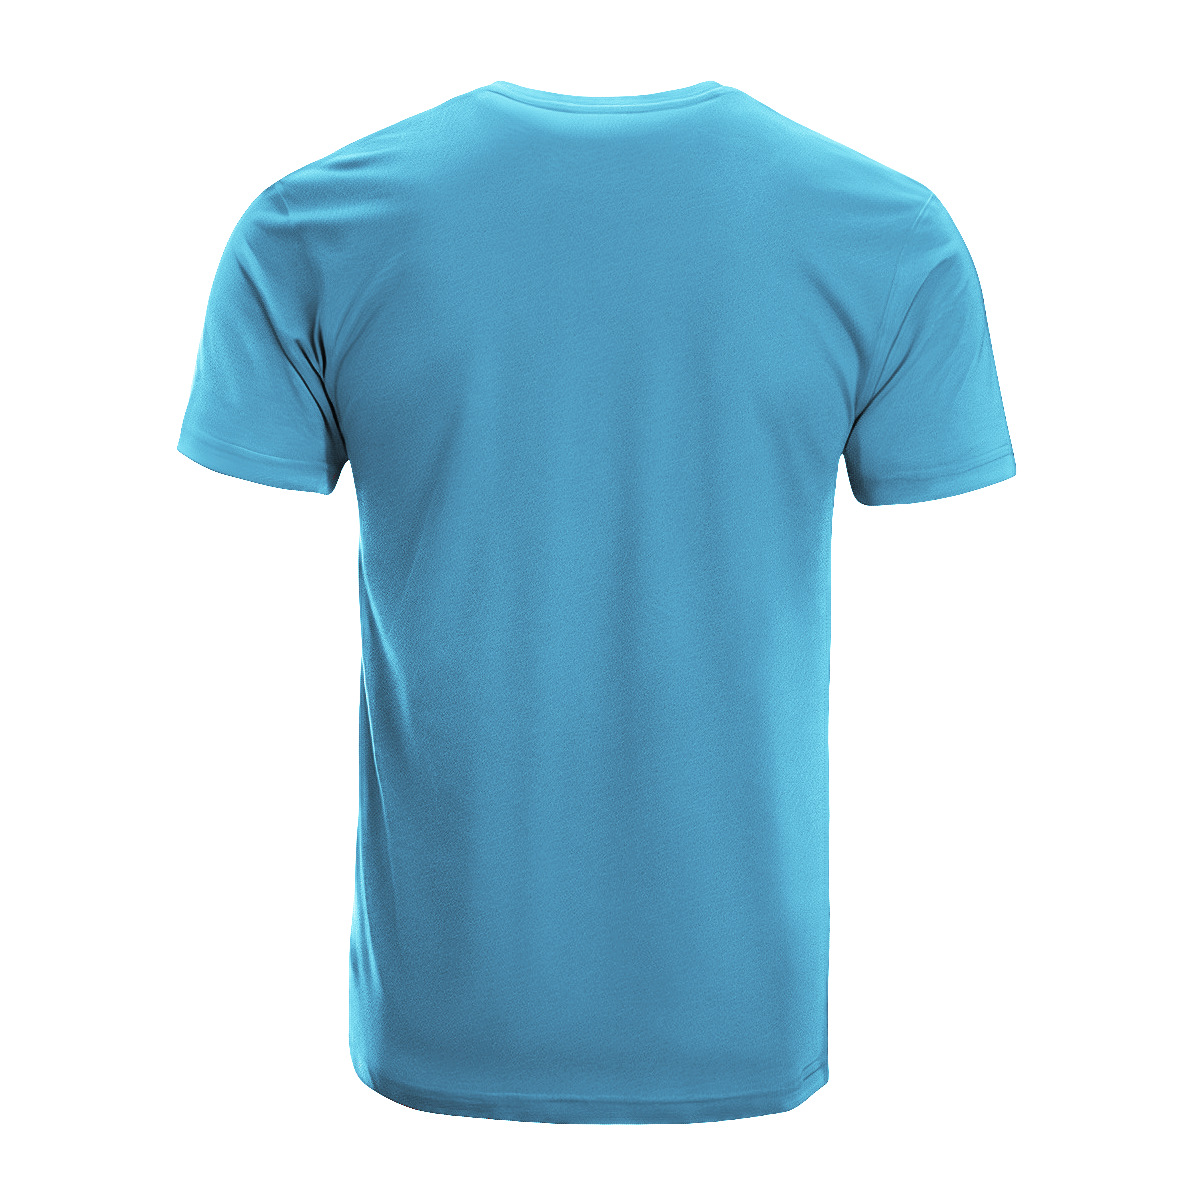 MacNicol Tartan Crest T-shirt - I'm not yelling style